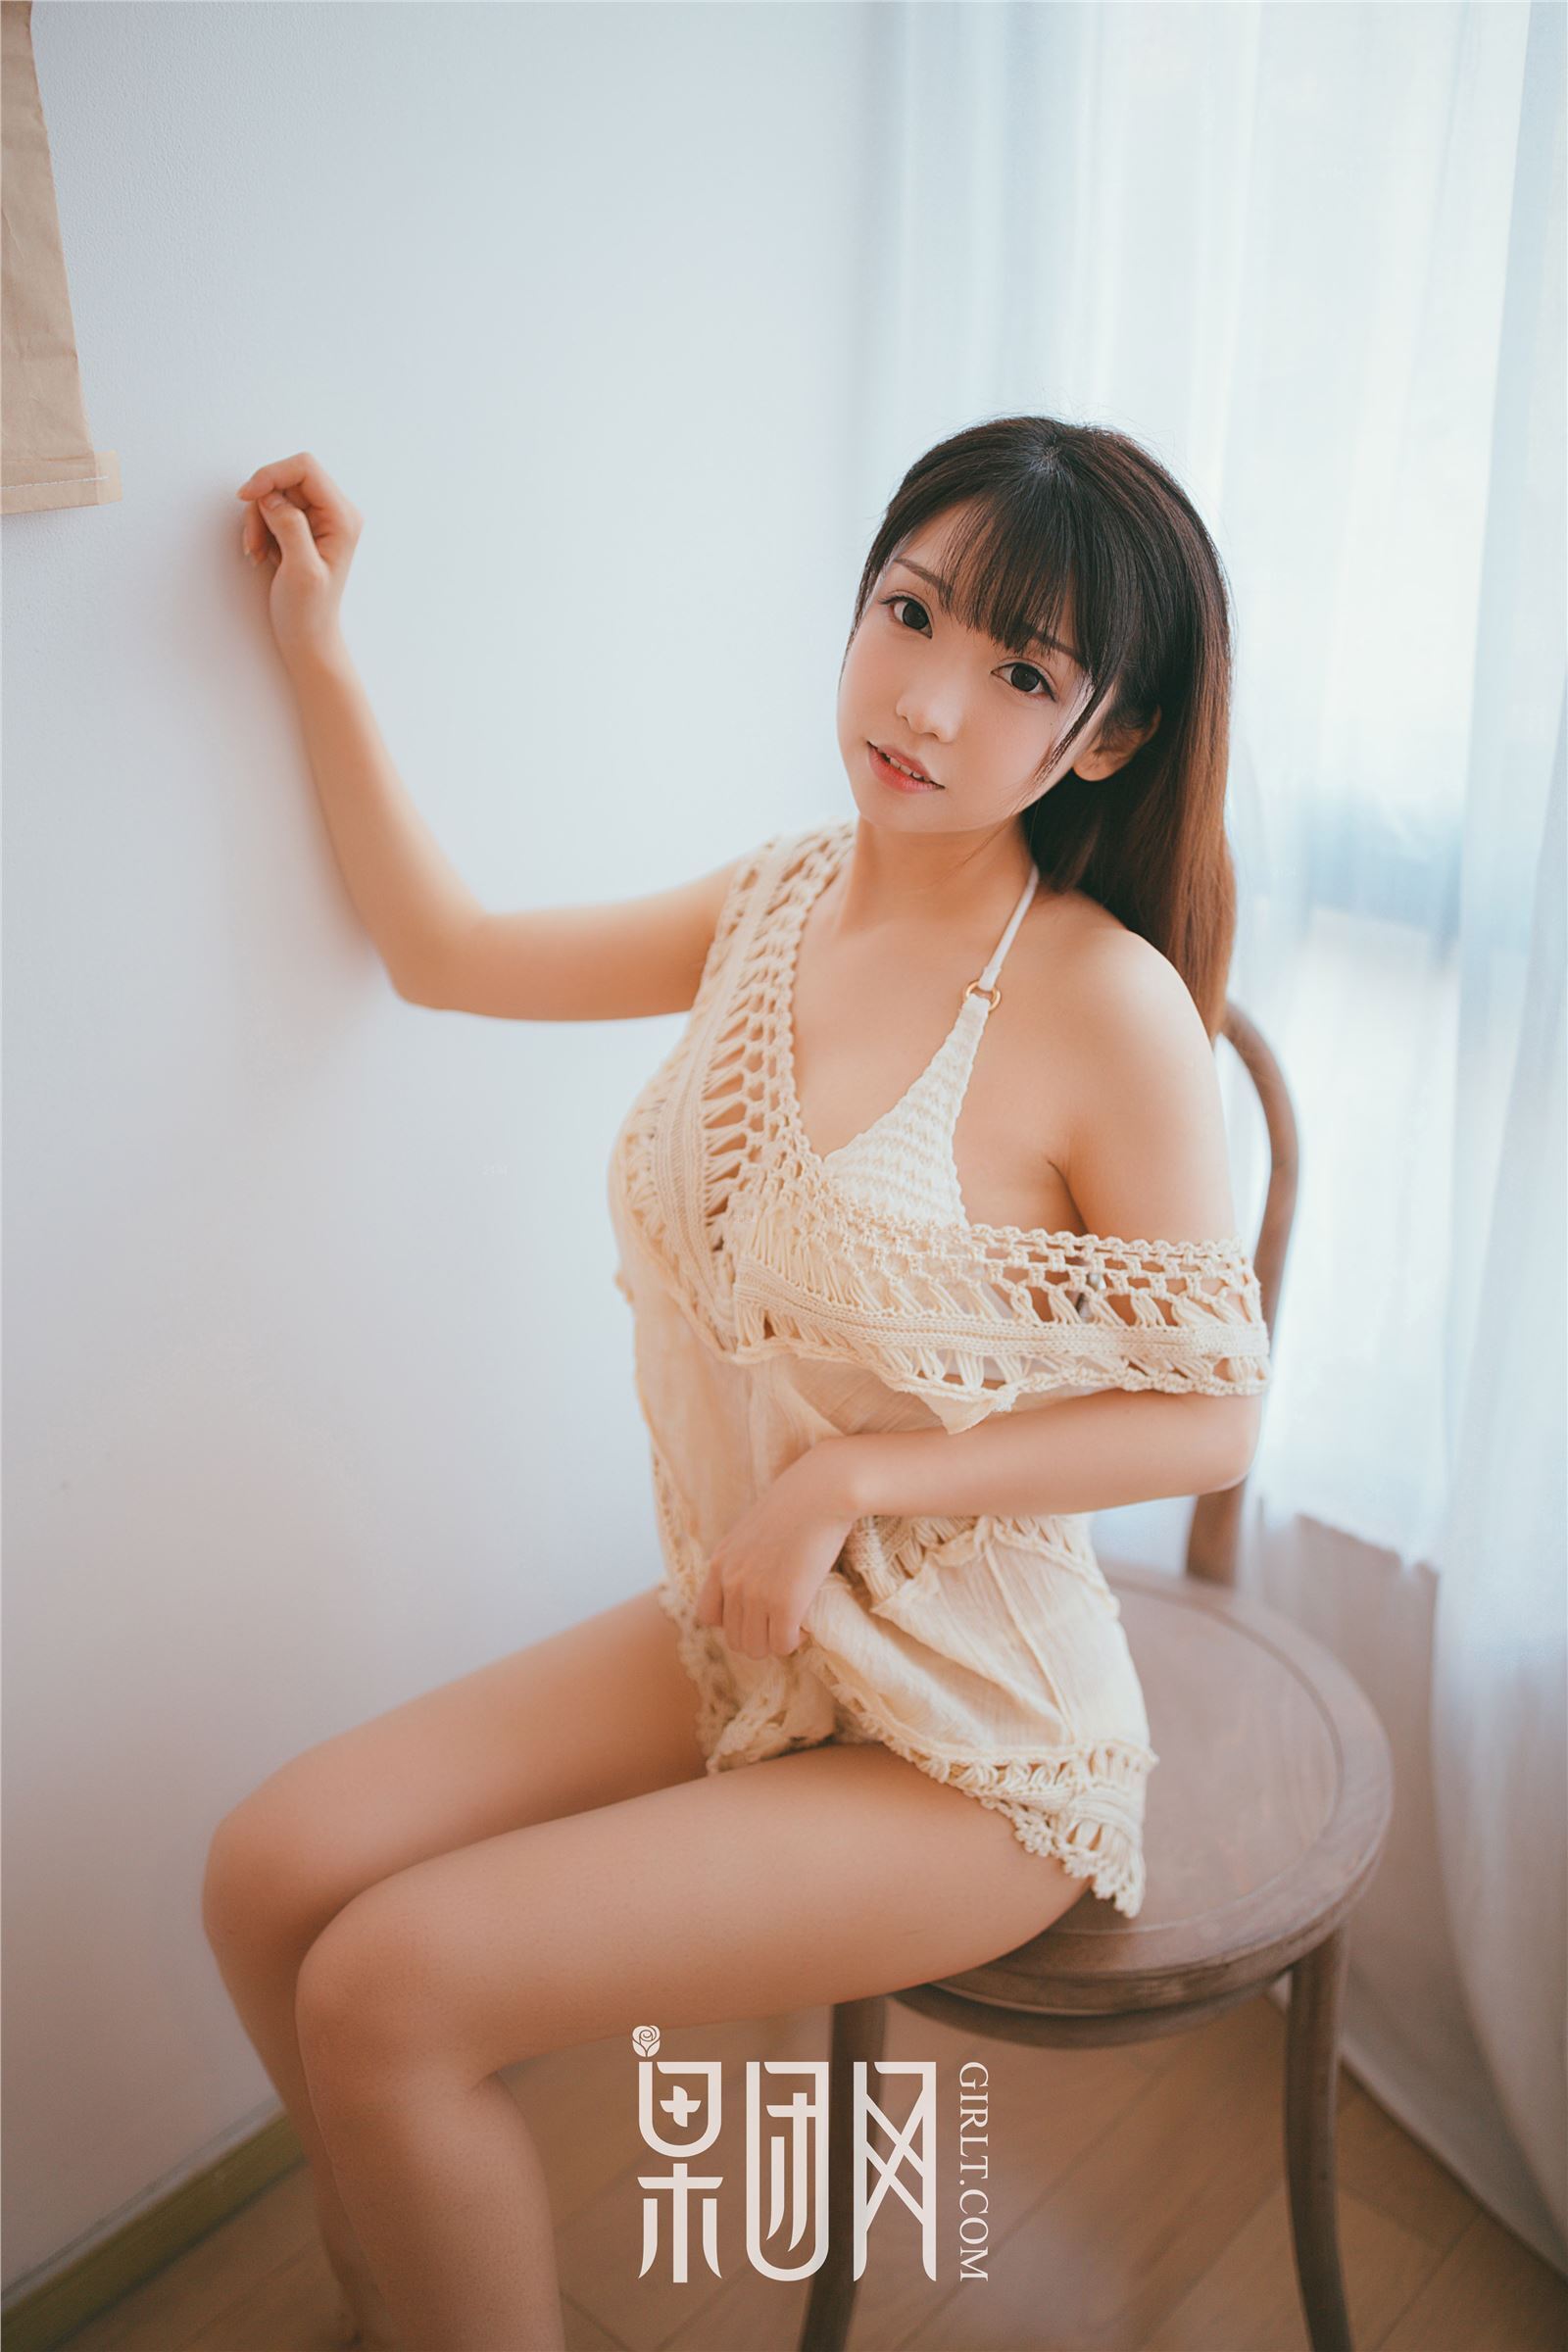 [Girlt guotuan.com] March 09, 2018 Jixin kumagawa no.025